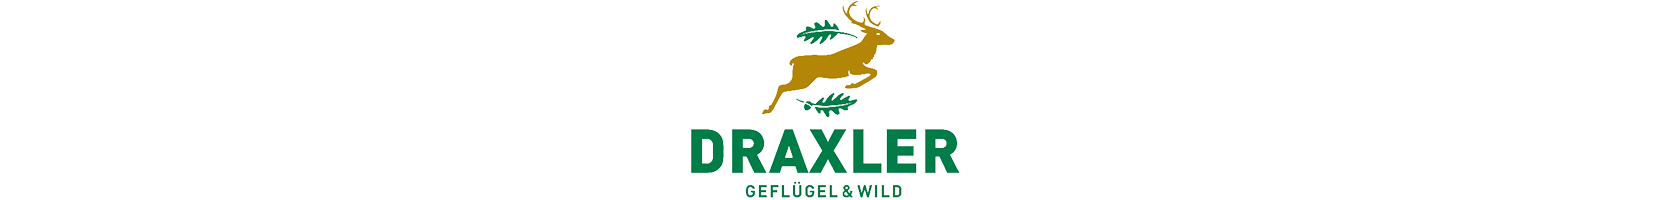 Draxler Logo